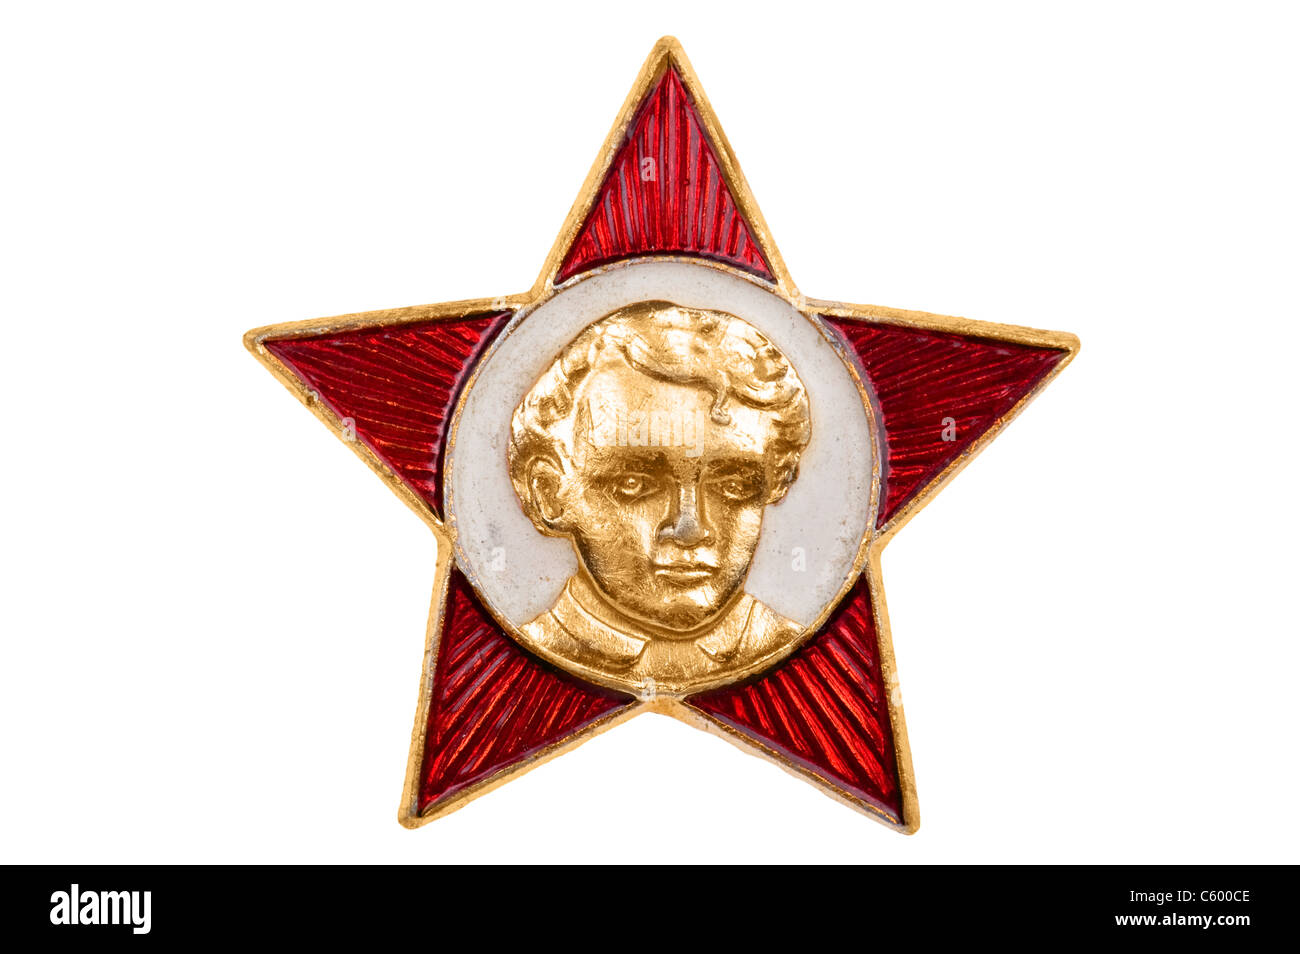 object on white - Soviet badge with lenin Stock Photo